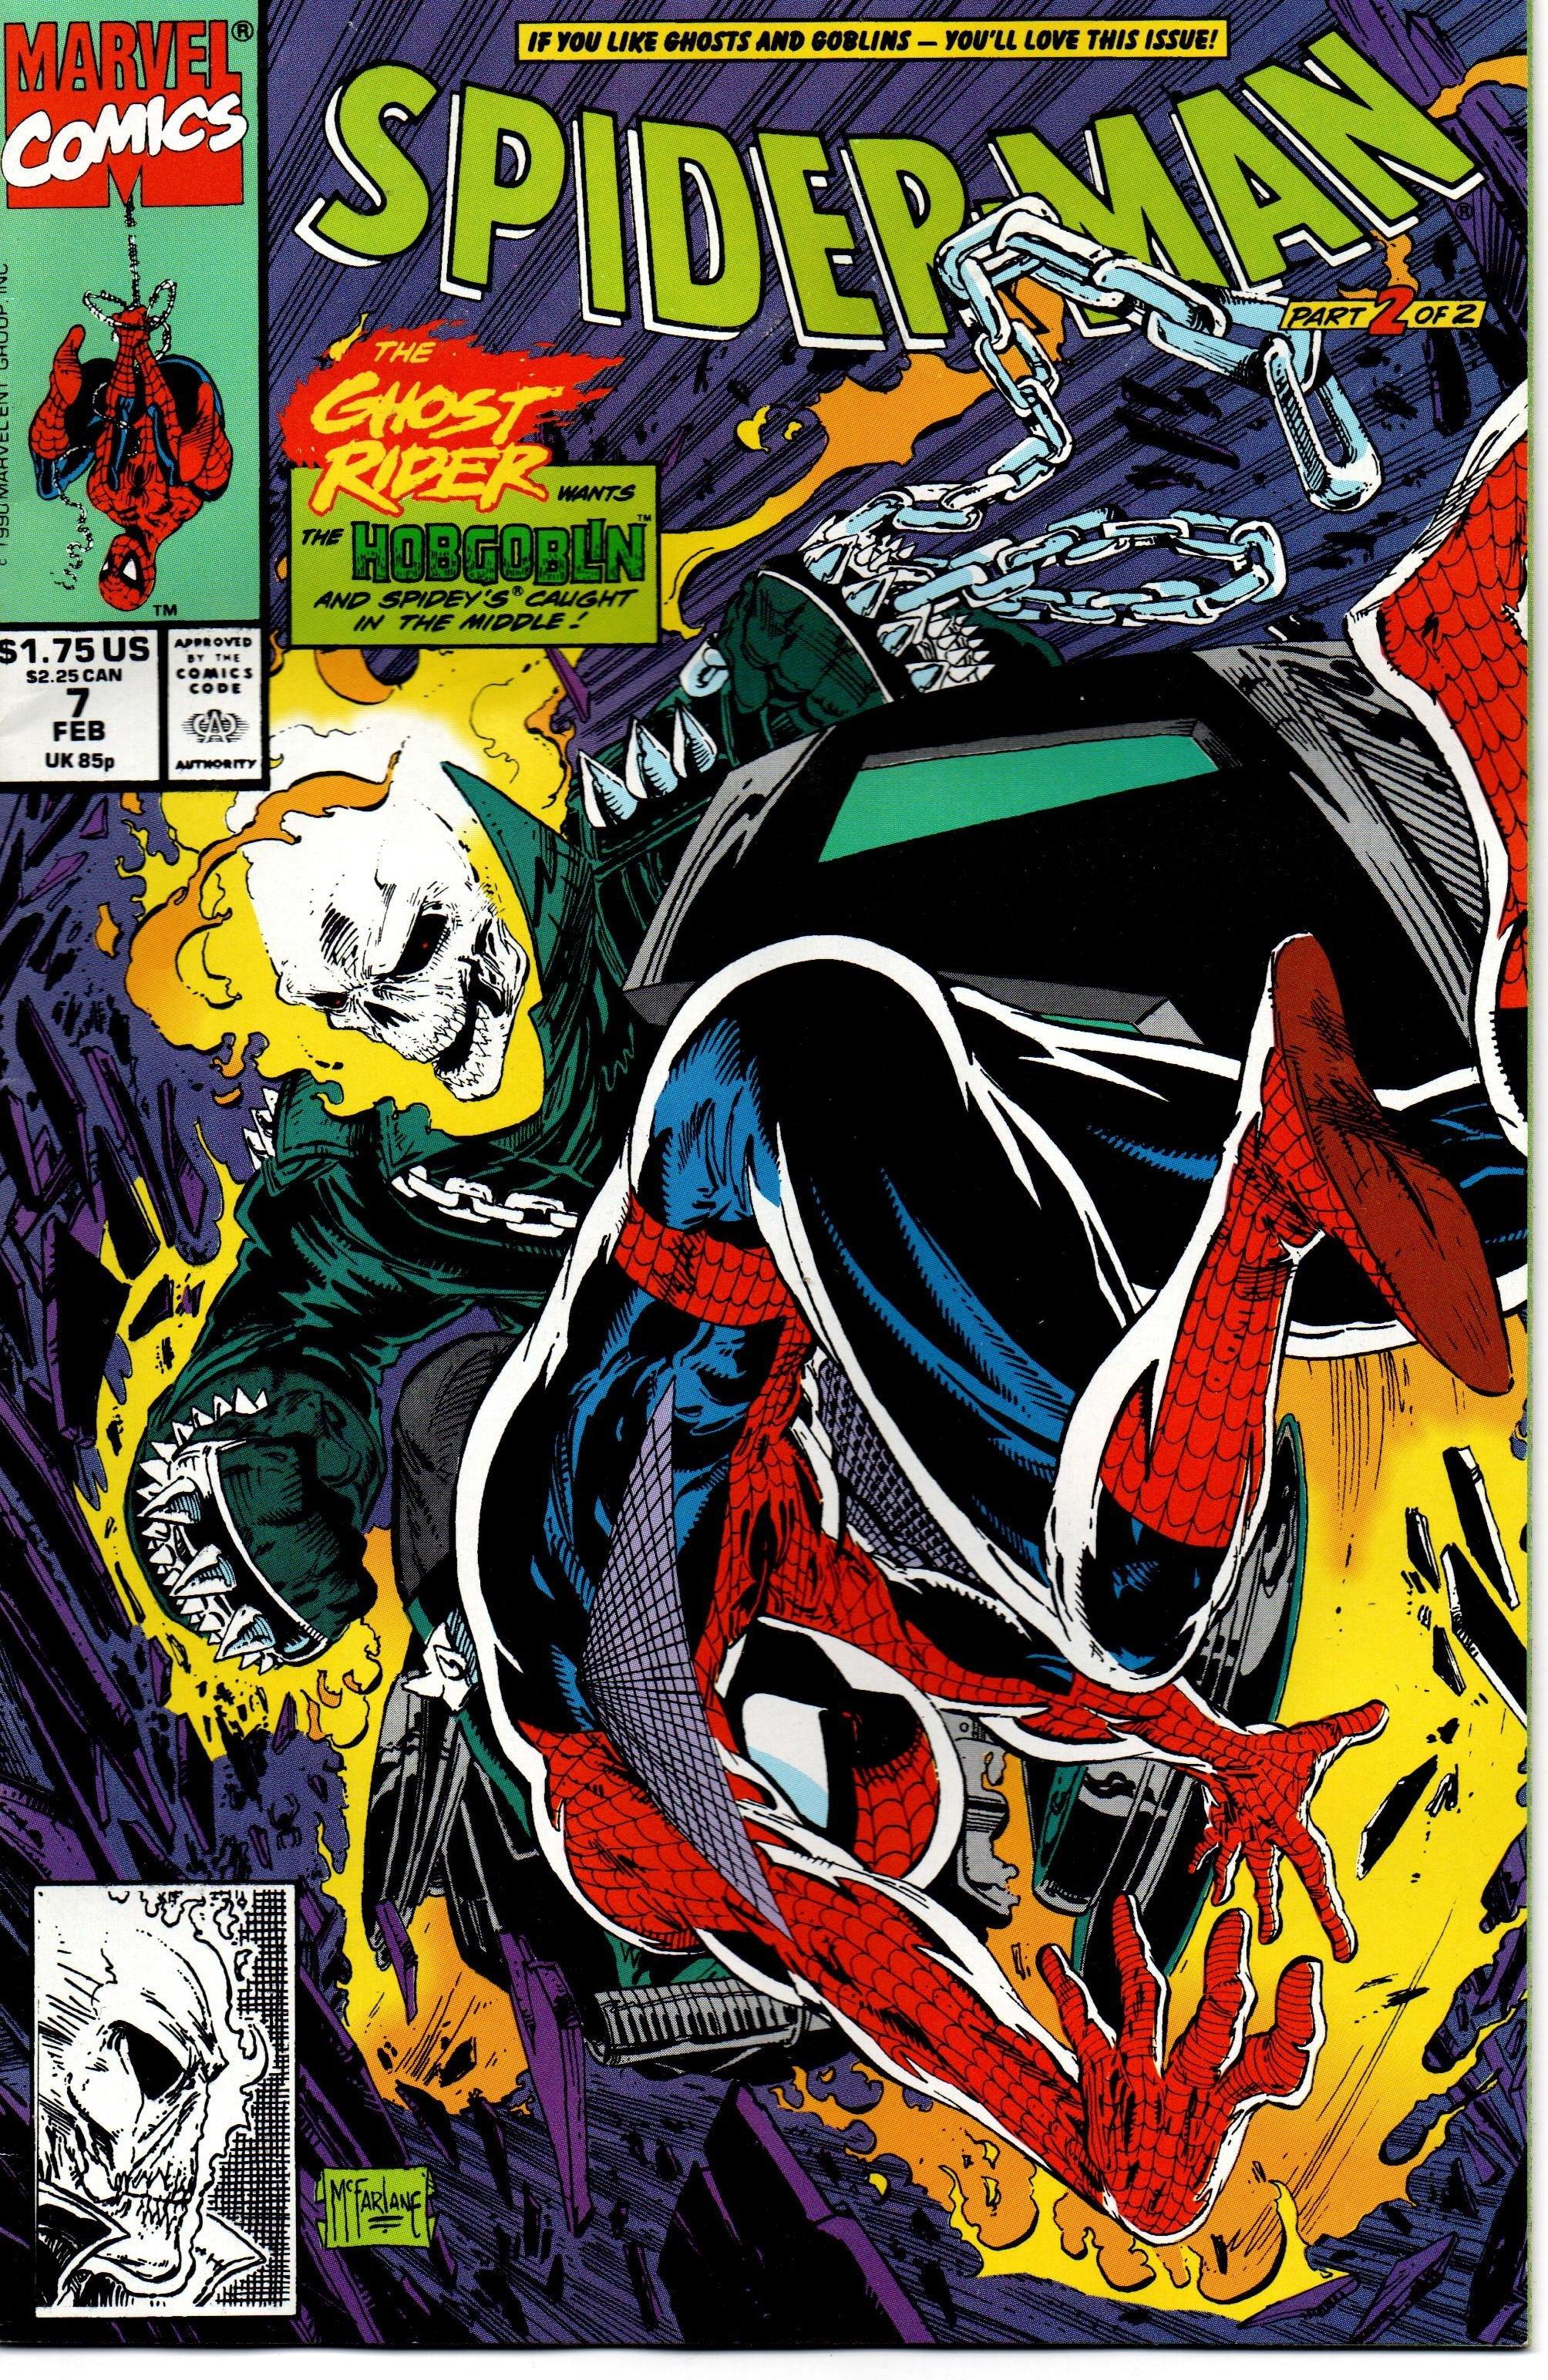 SPIDER-MAN # 7 (1990) FEB 1990 [USED]